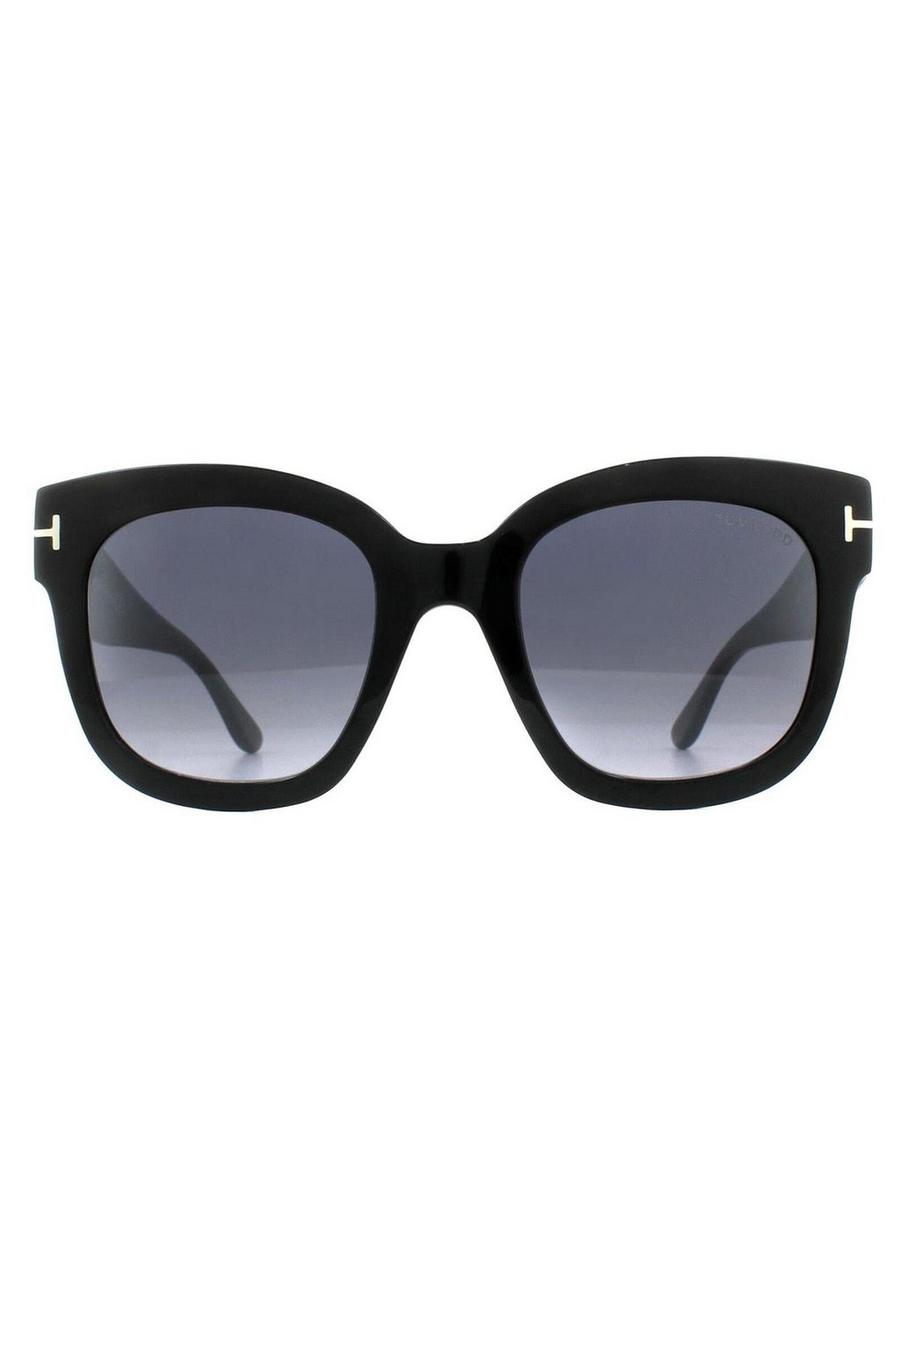 Square Shiny Black Smoke Grey Mirror Sunglasses